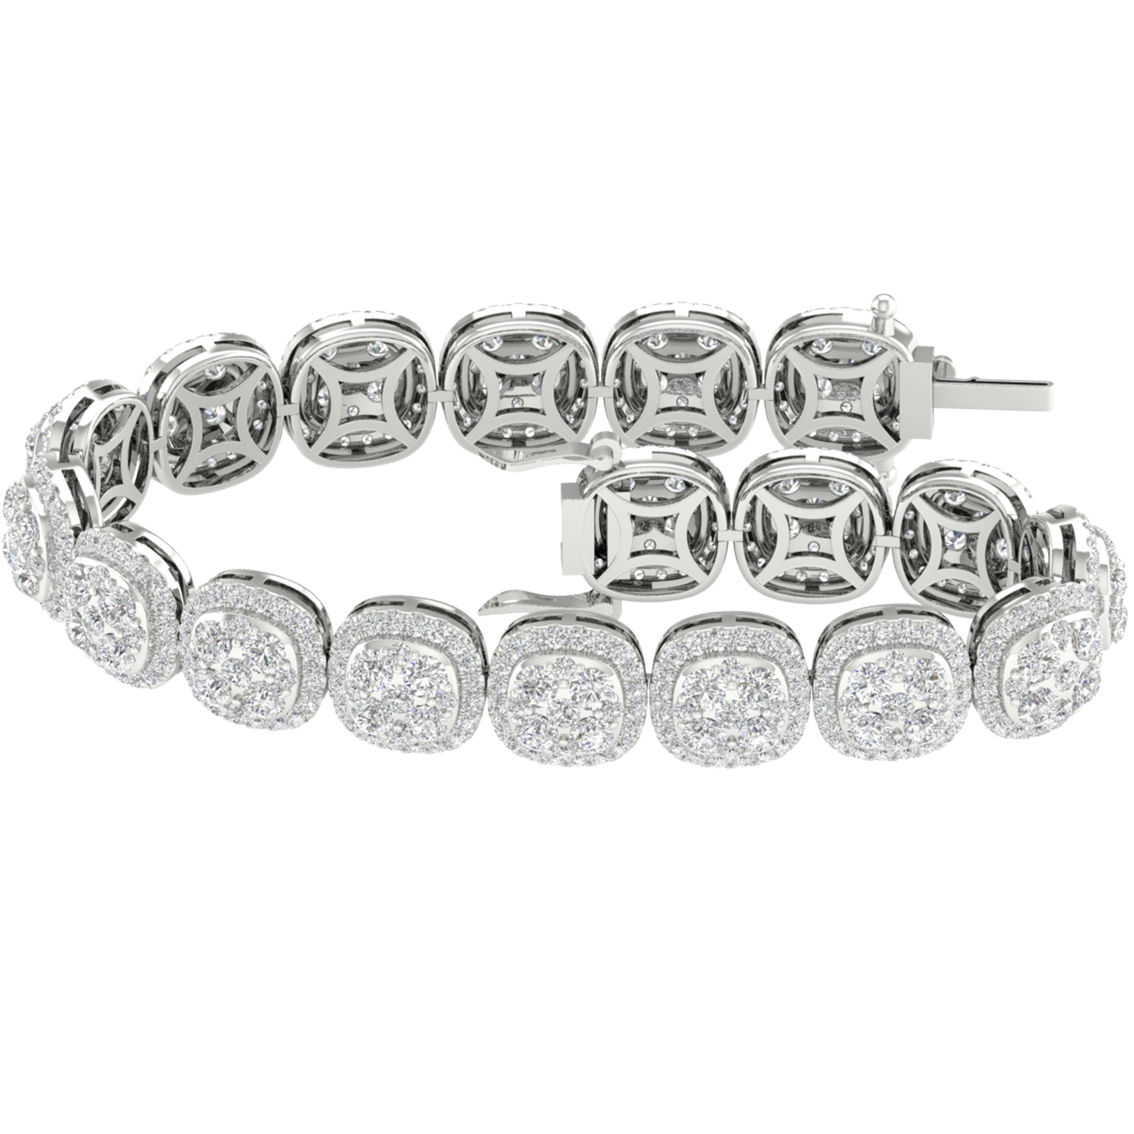 Pure Brilliance 14K White Gold 10 CTW Fashion Bracelet with IGI Certification